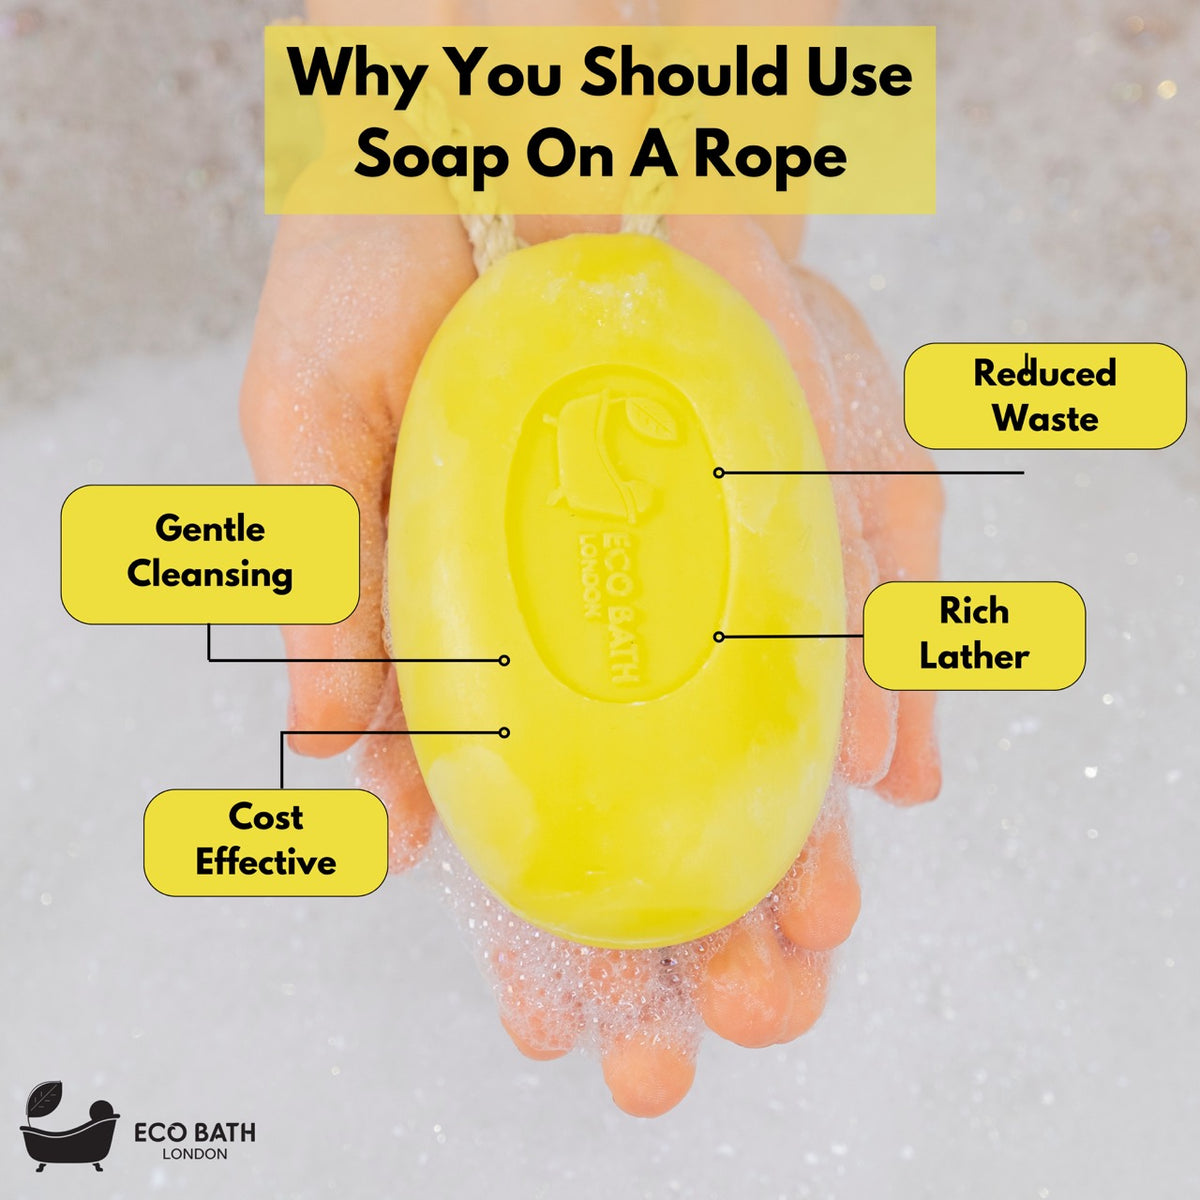 Eco Bath Lime Soap on a Rope - 220g